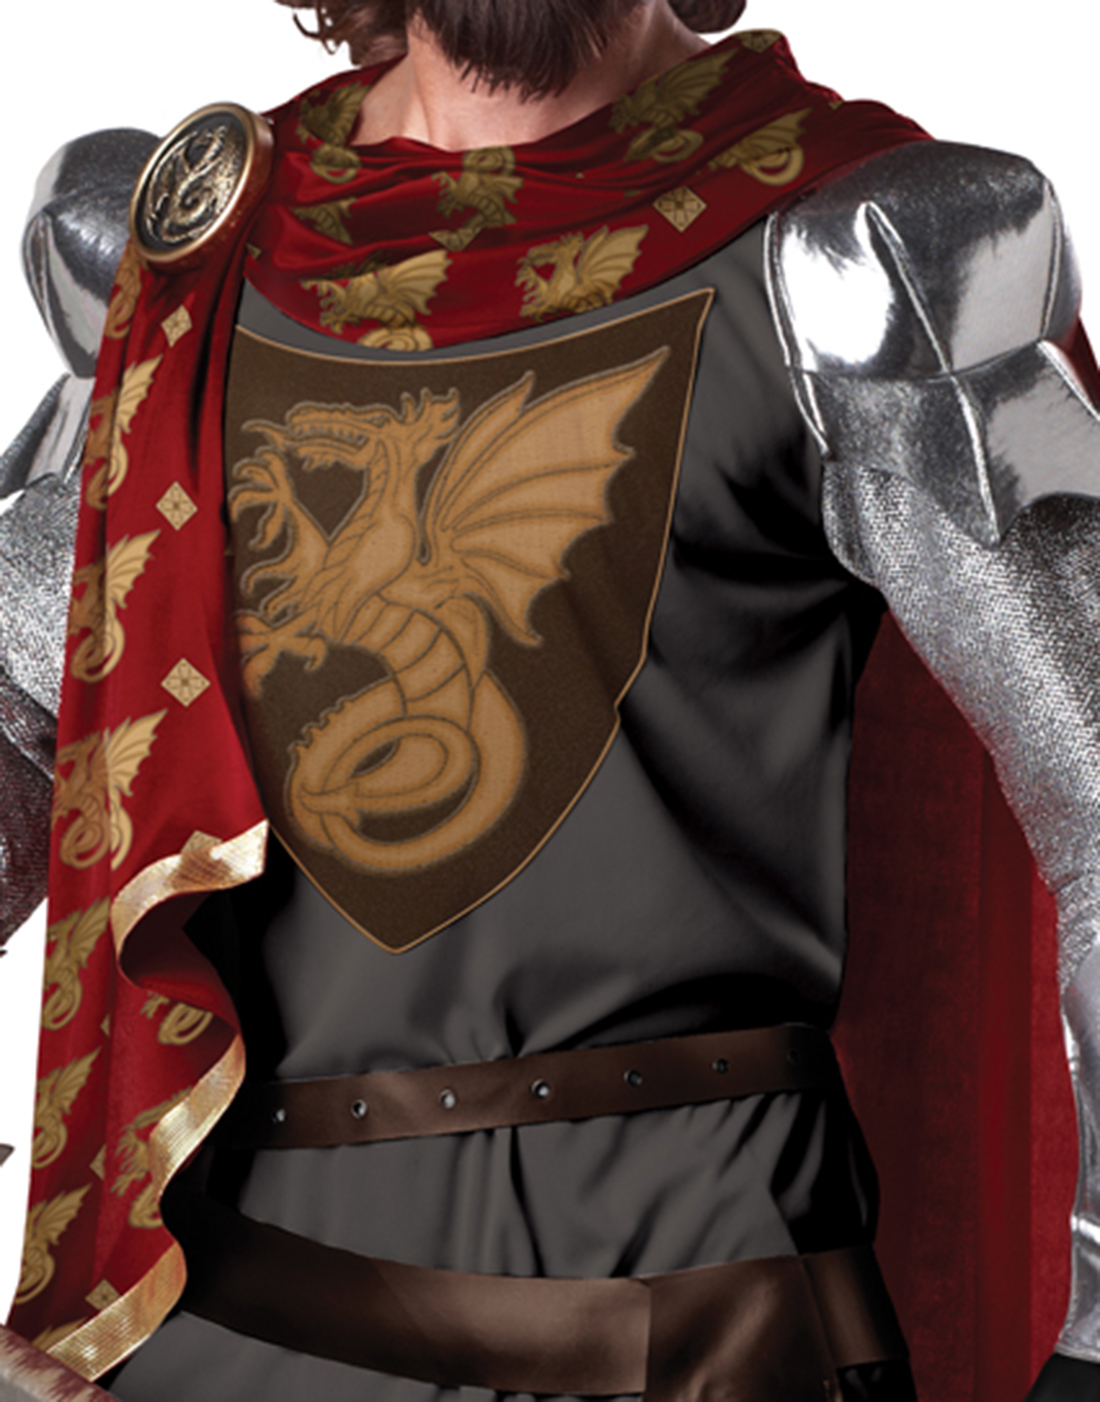 Male King Arthur Costume - image 2 of 4